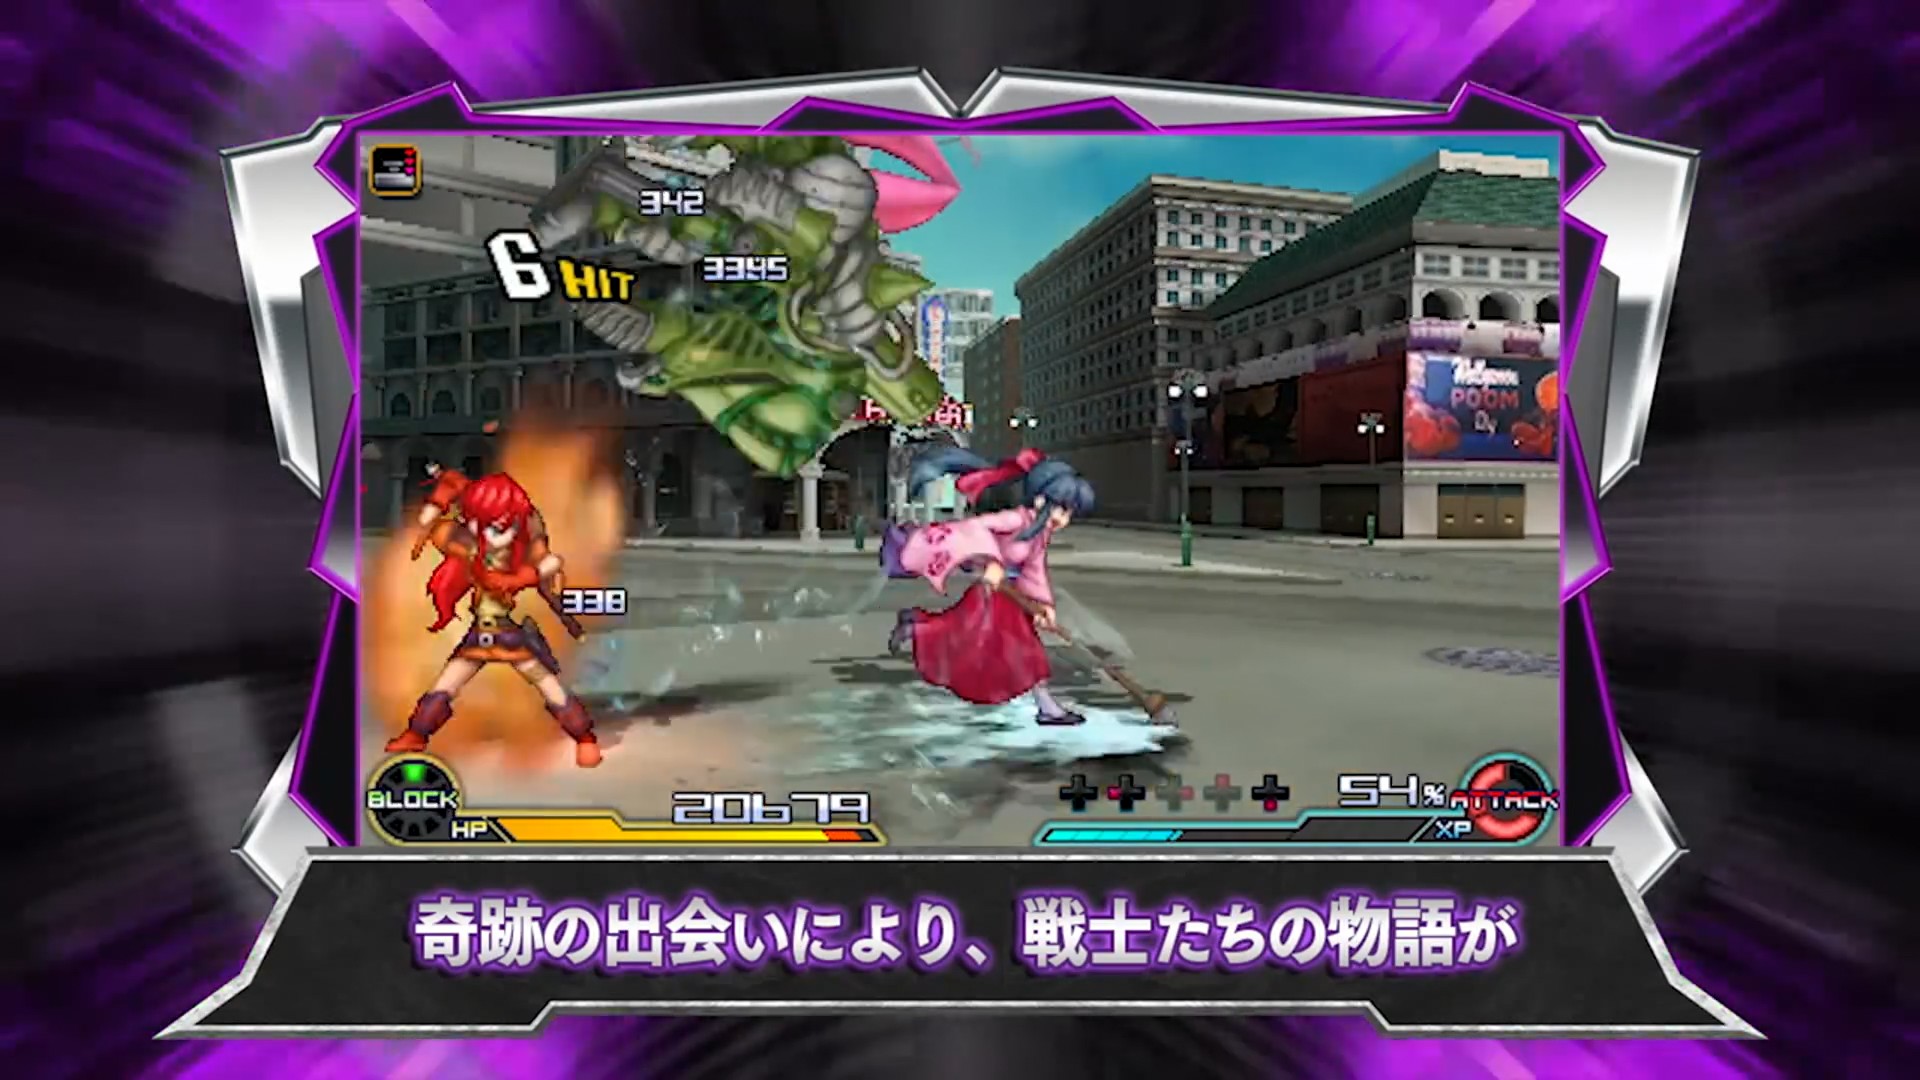 Sakura has a new attack, involving using a mop